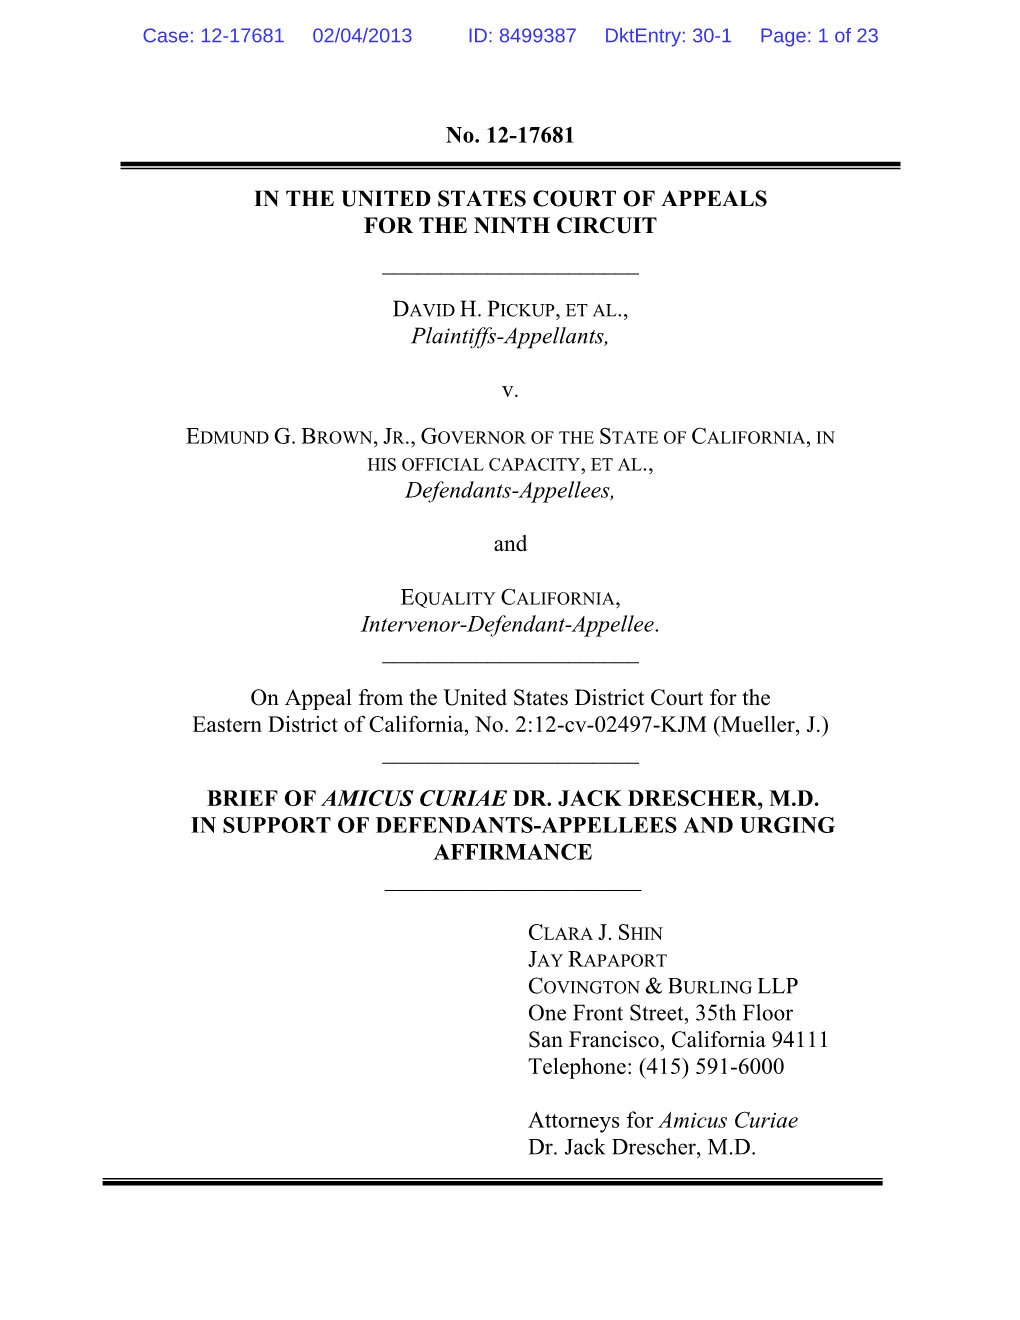 Plaintiffs-Appellants, V. Defend